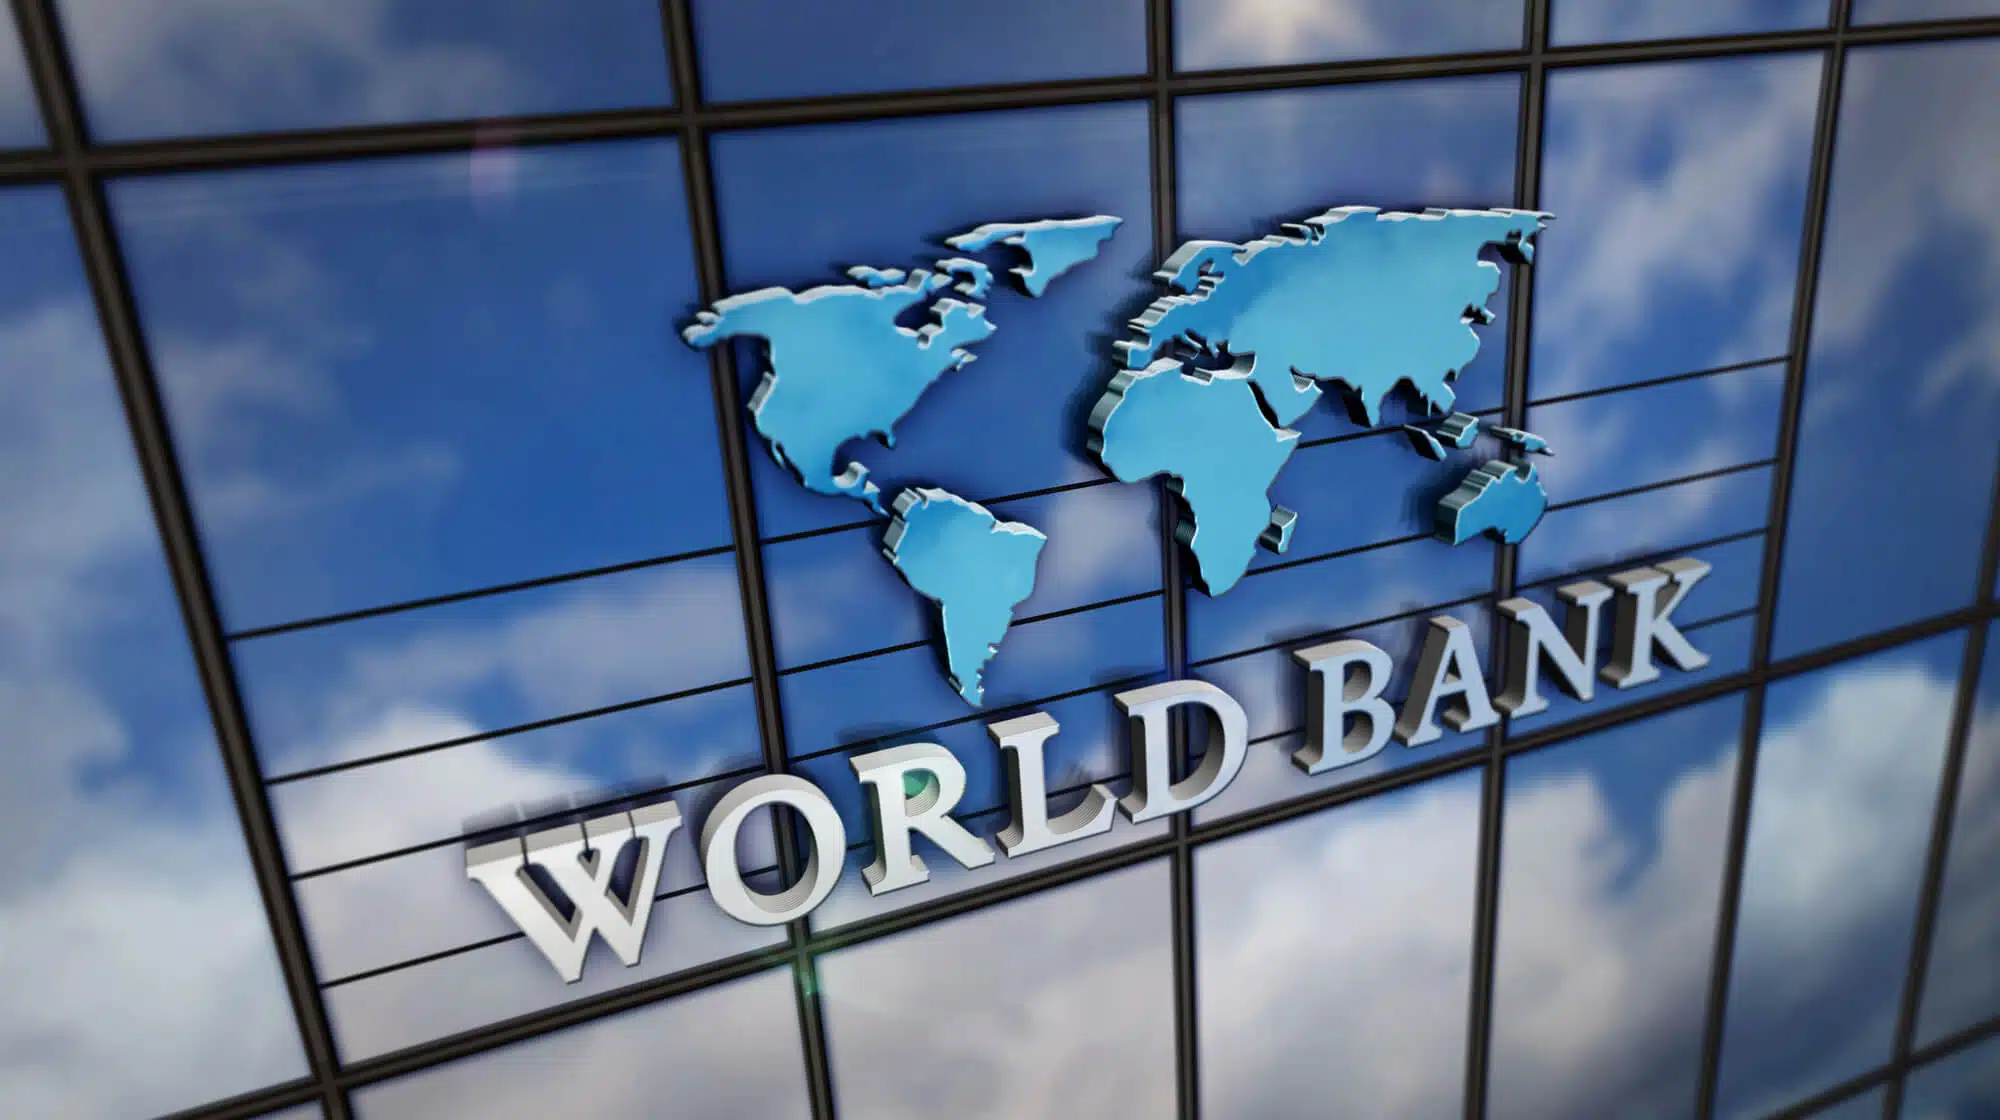 The World Bank. Illustration: depositphotos.com